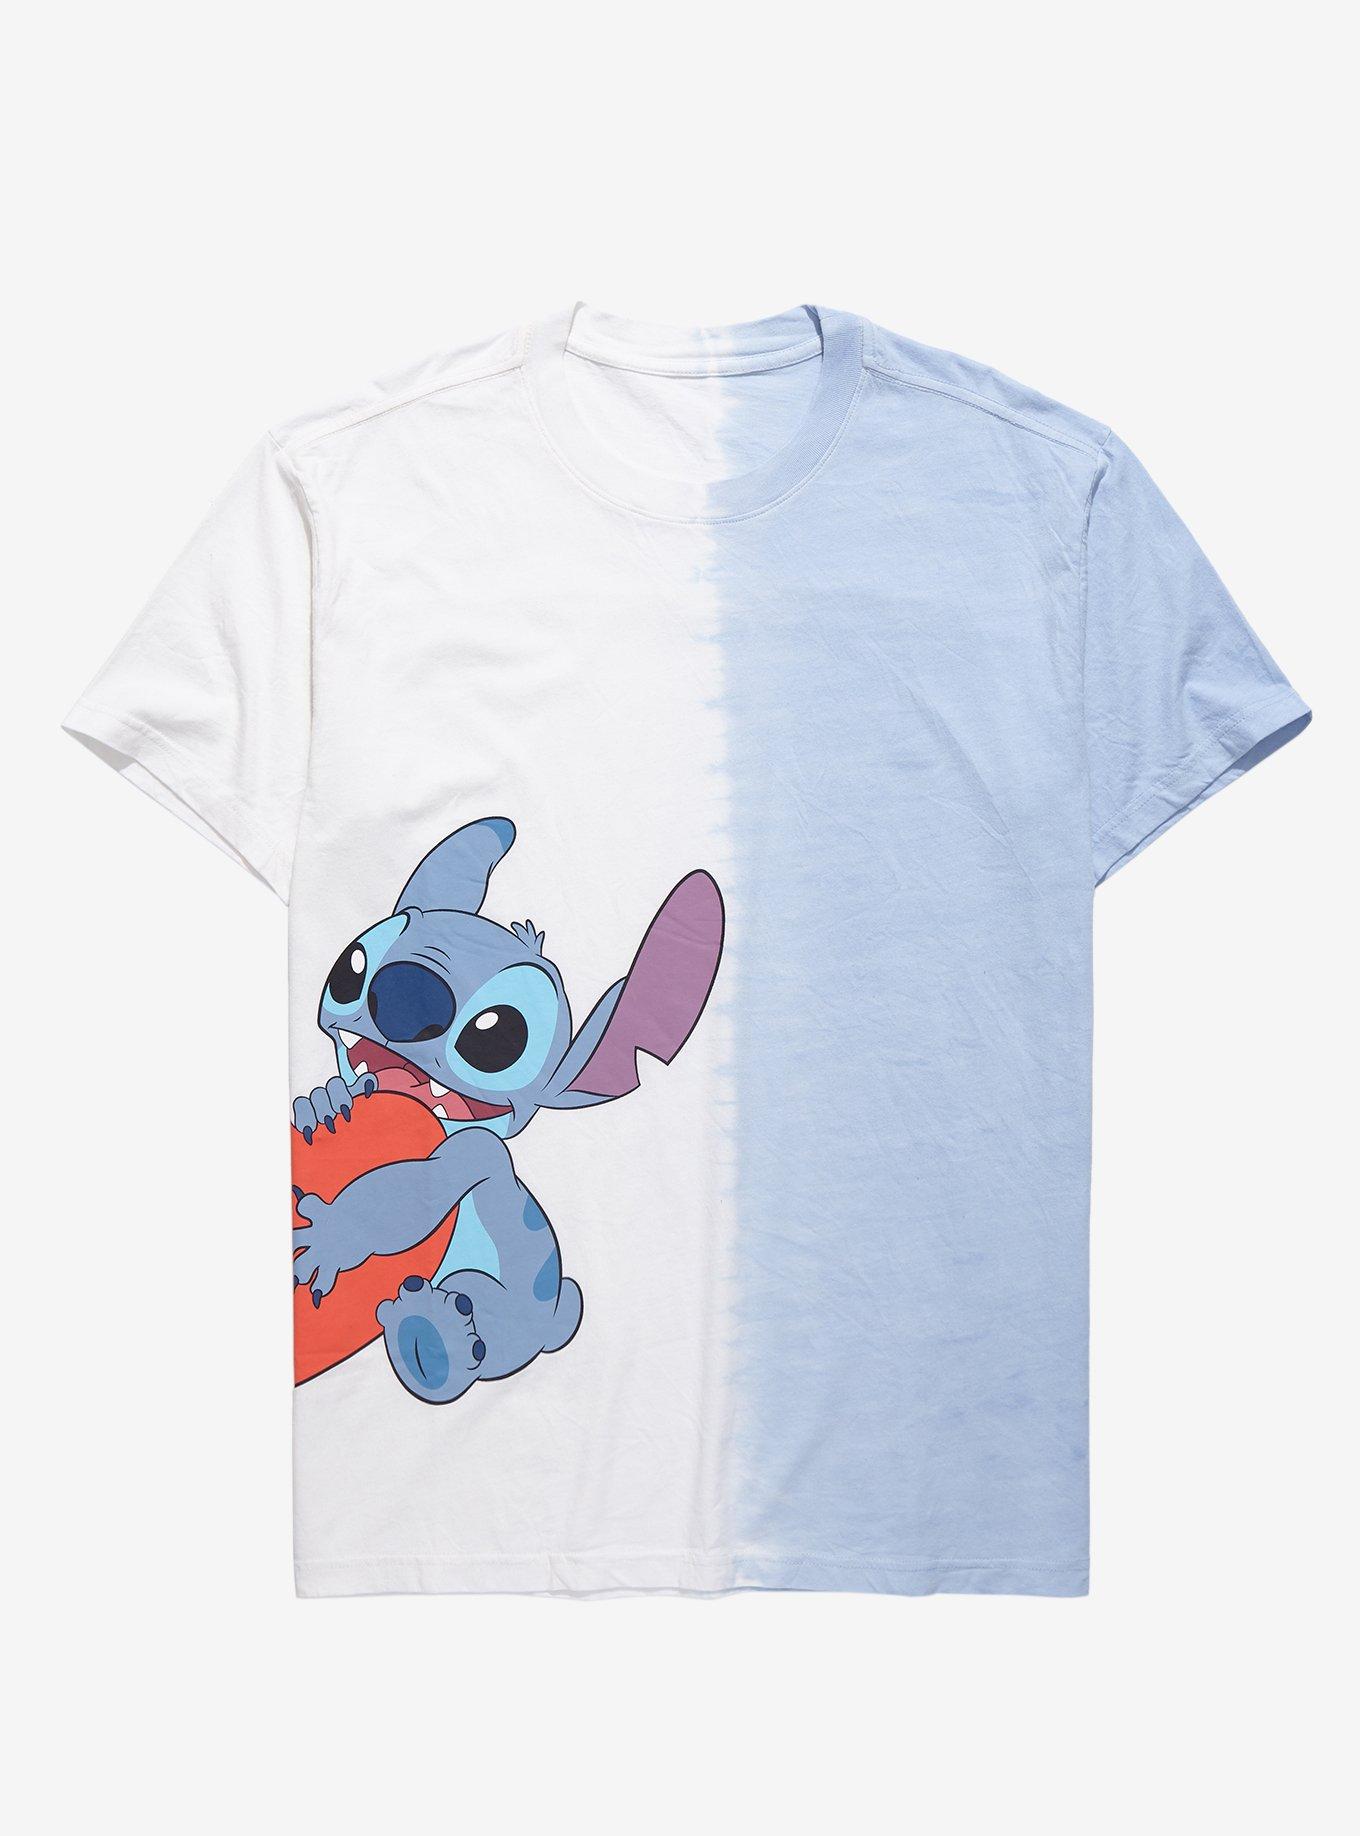 Louis Vuitton Stitch Disney Cute 3D T-Shirt - LIMITED EDITION